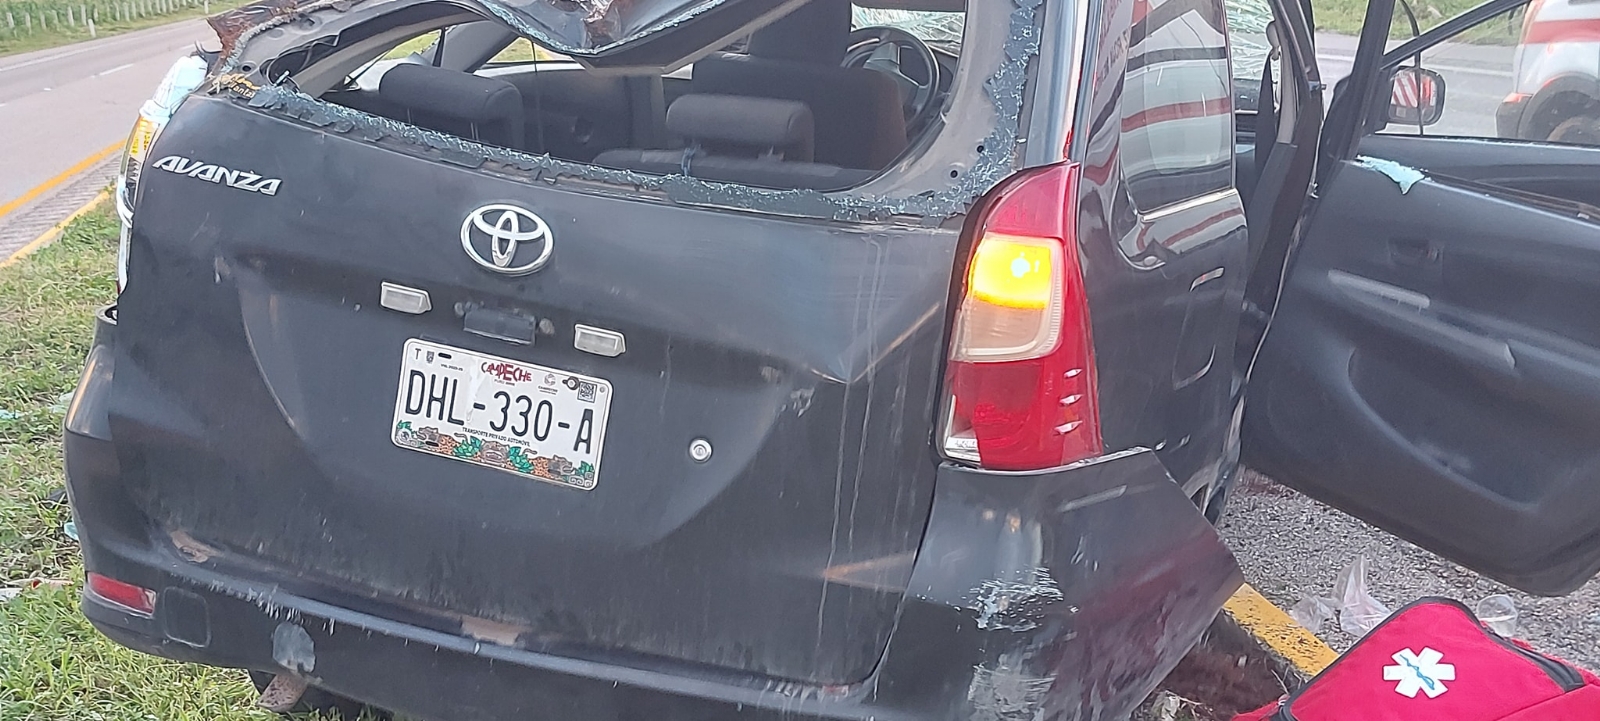 Volcadura de un auto en la carretera Campeche-Mérida deja 4 lesionados